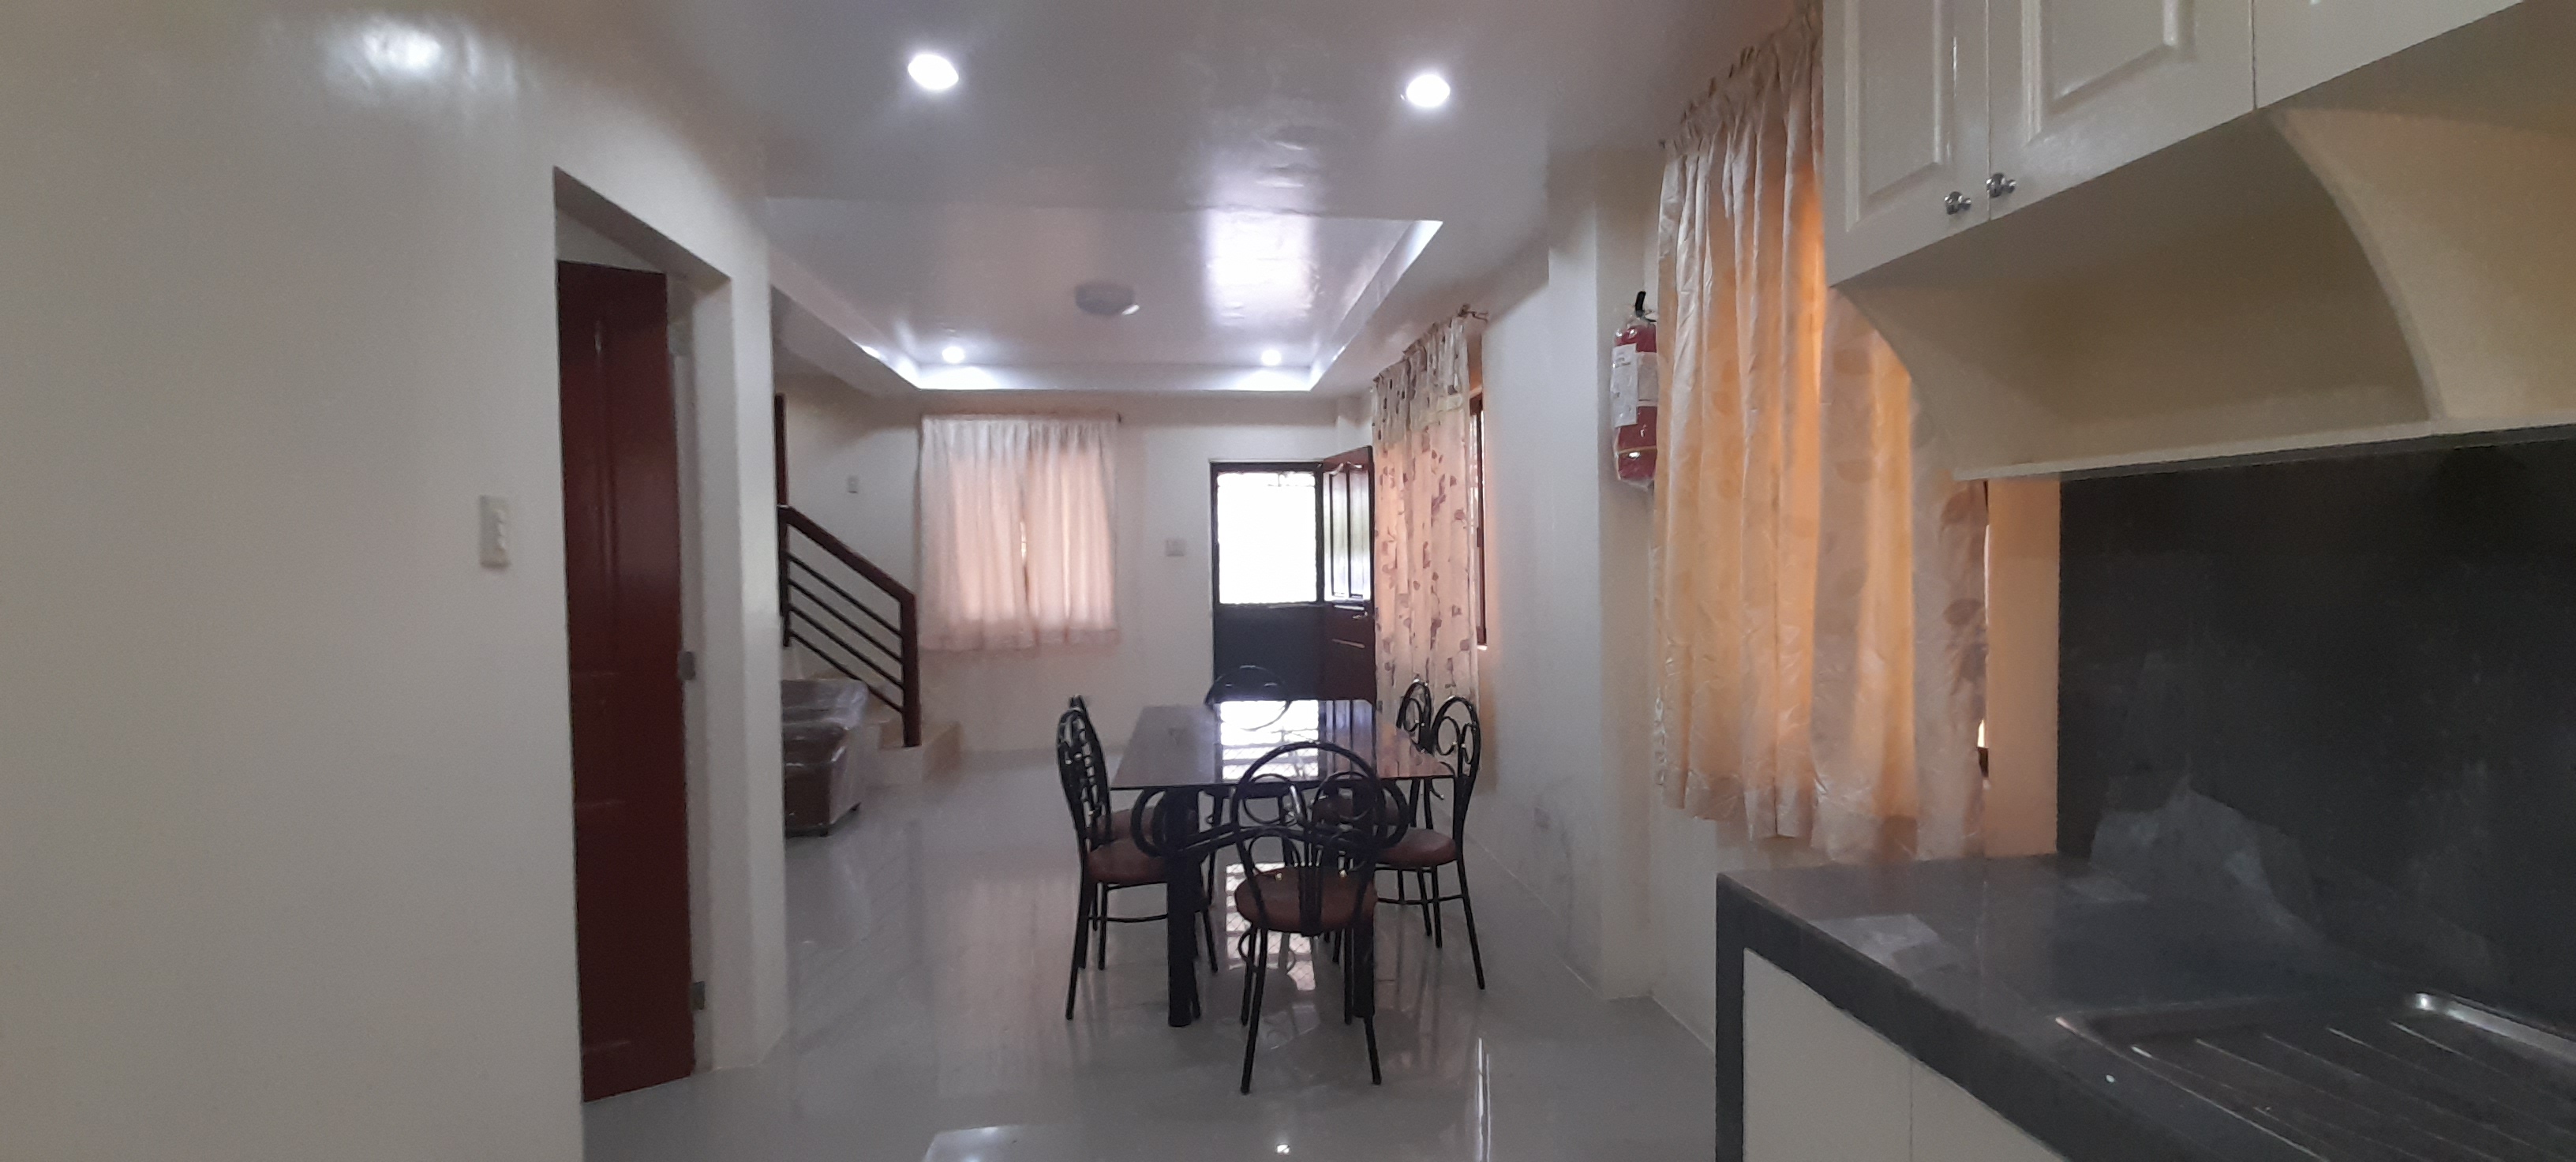 4-bedroom-and-semi-furnished-house-in-talamban-cebu-city